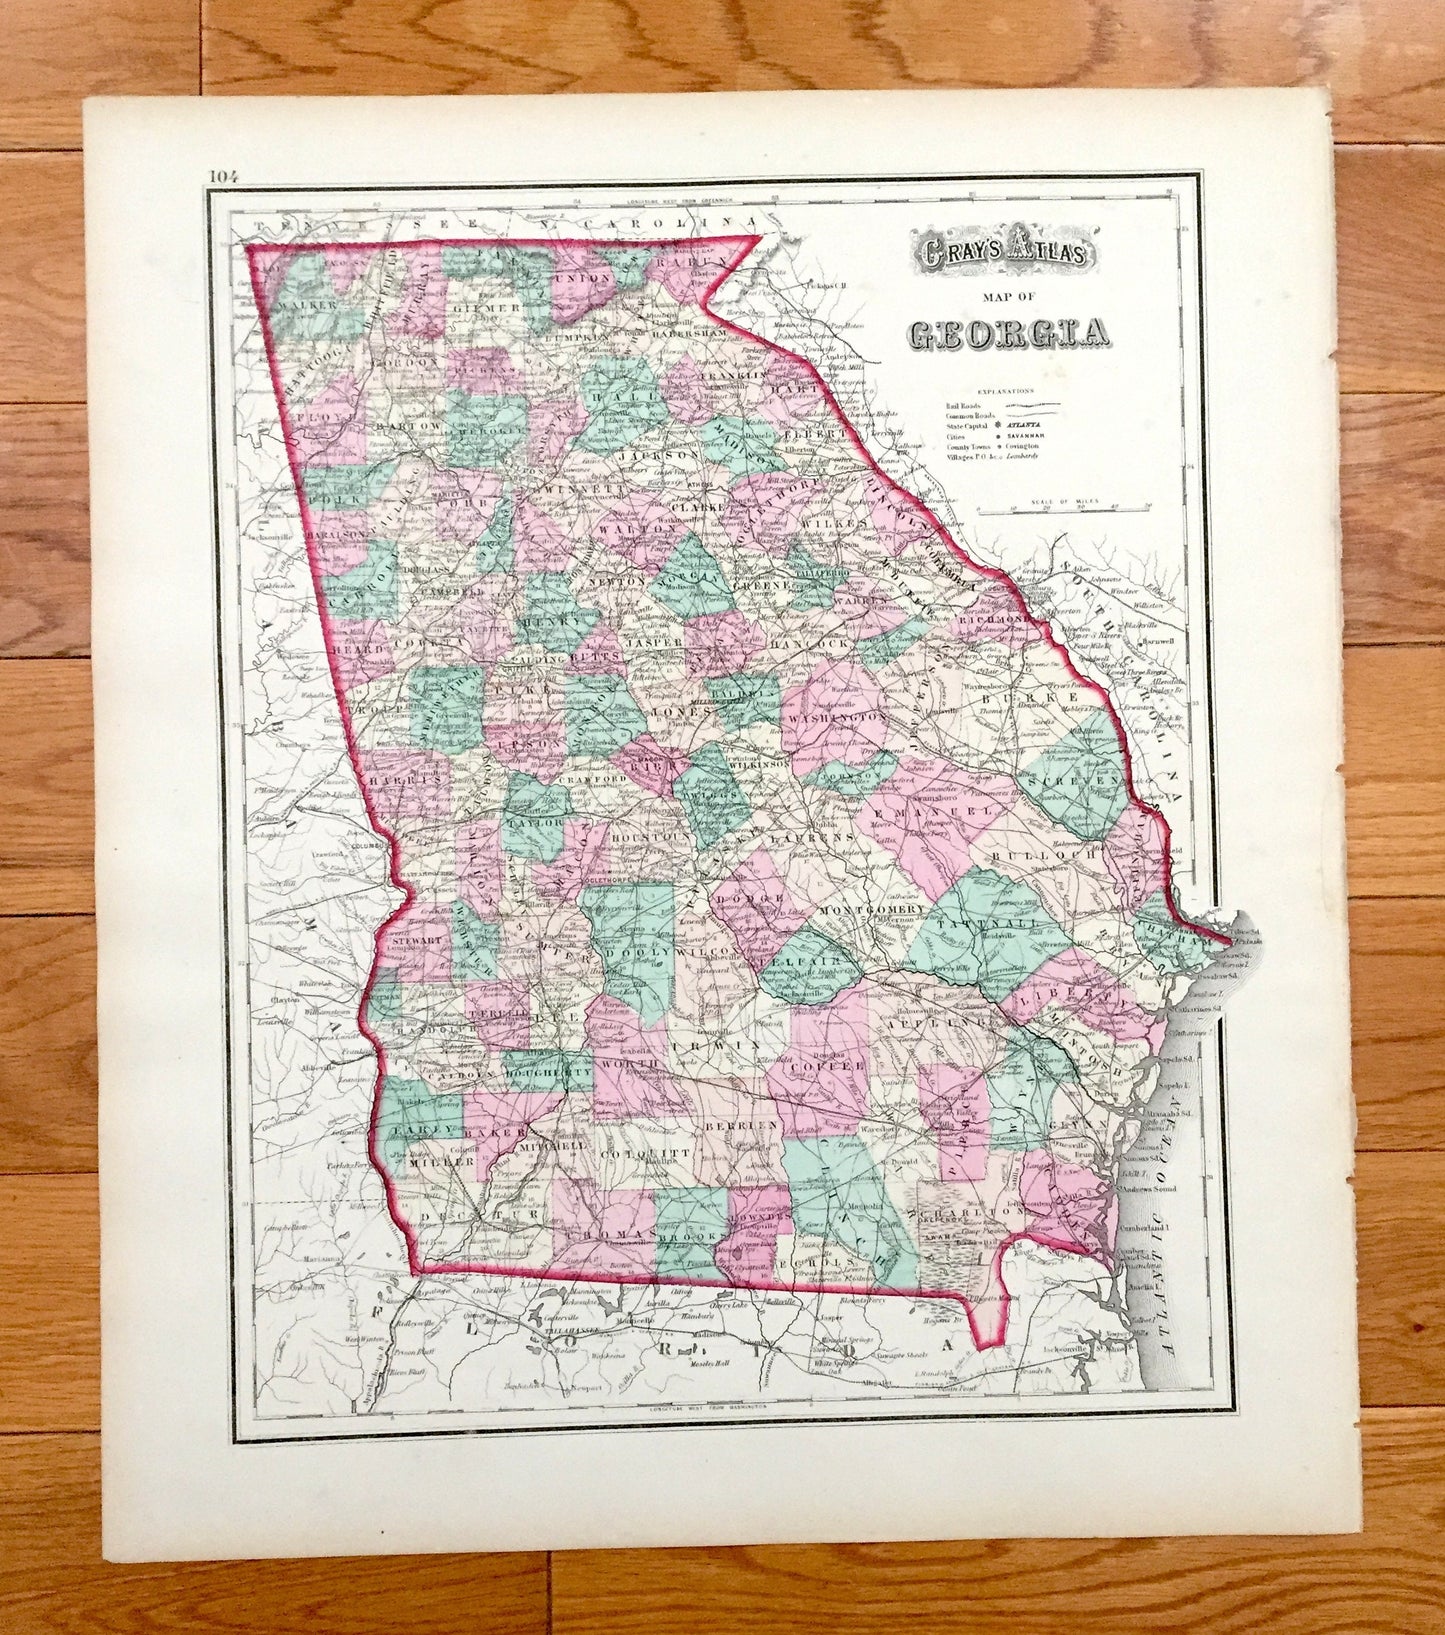 Antique 1874 South Carolina / Georgia State Map from O.W. Grays Atlas of United States of America; Stedman, Brown, Lyon – Charleston Atlanta